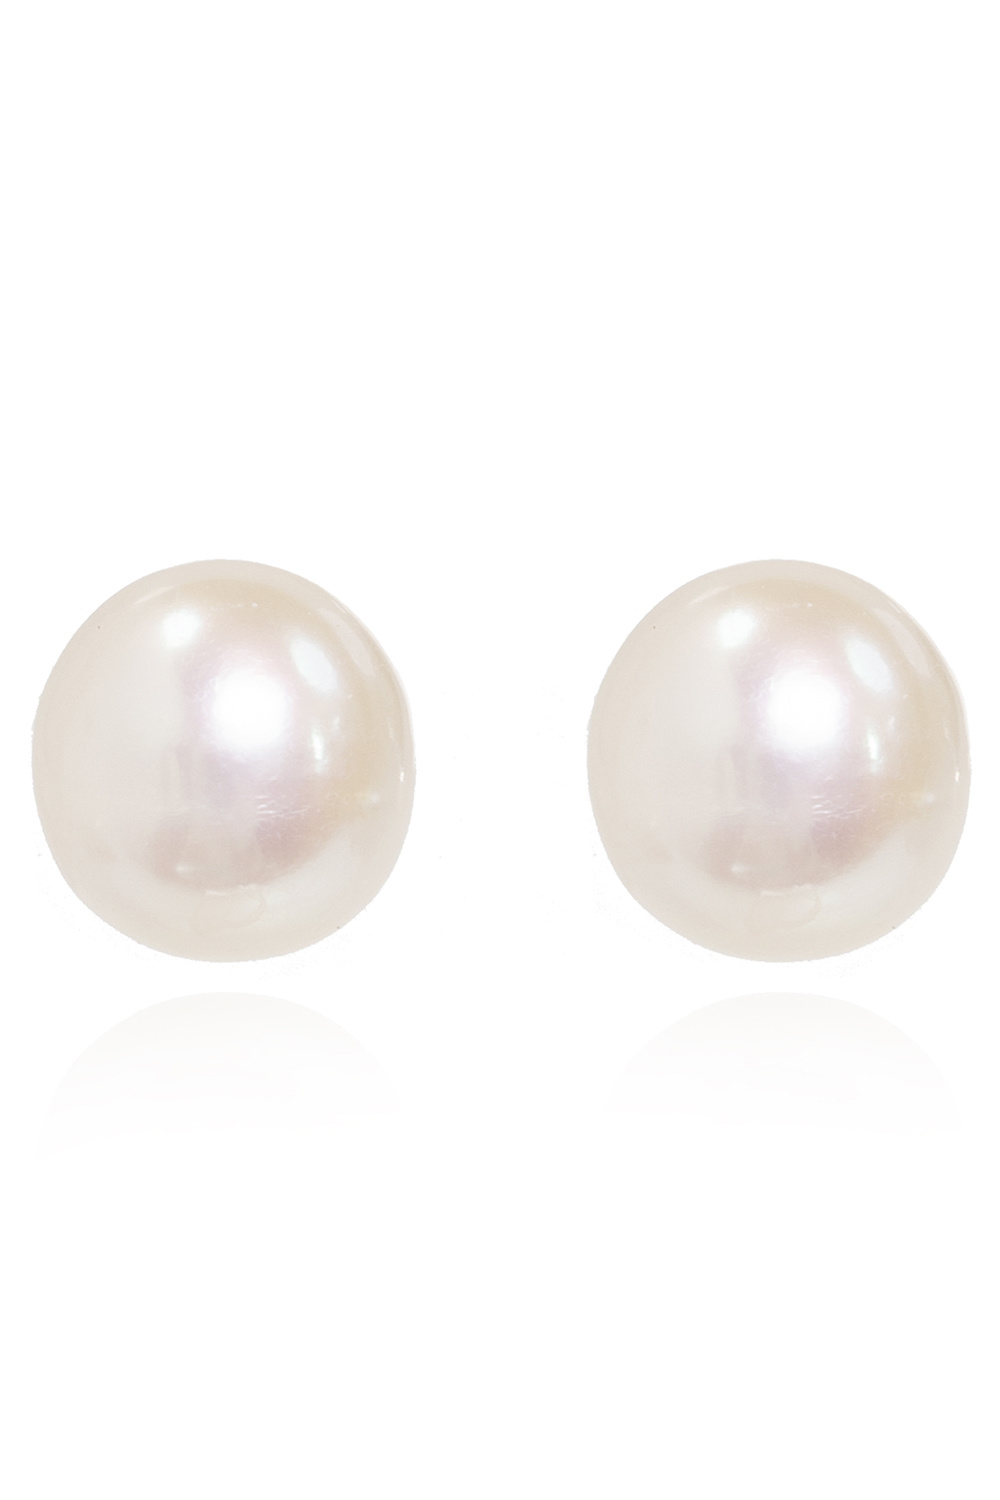 Kate Spade ‘Pearl Drops’ earrings